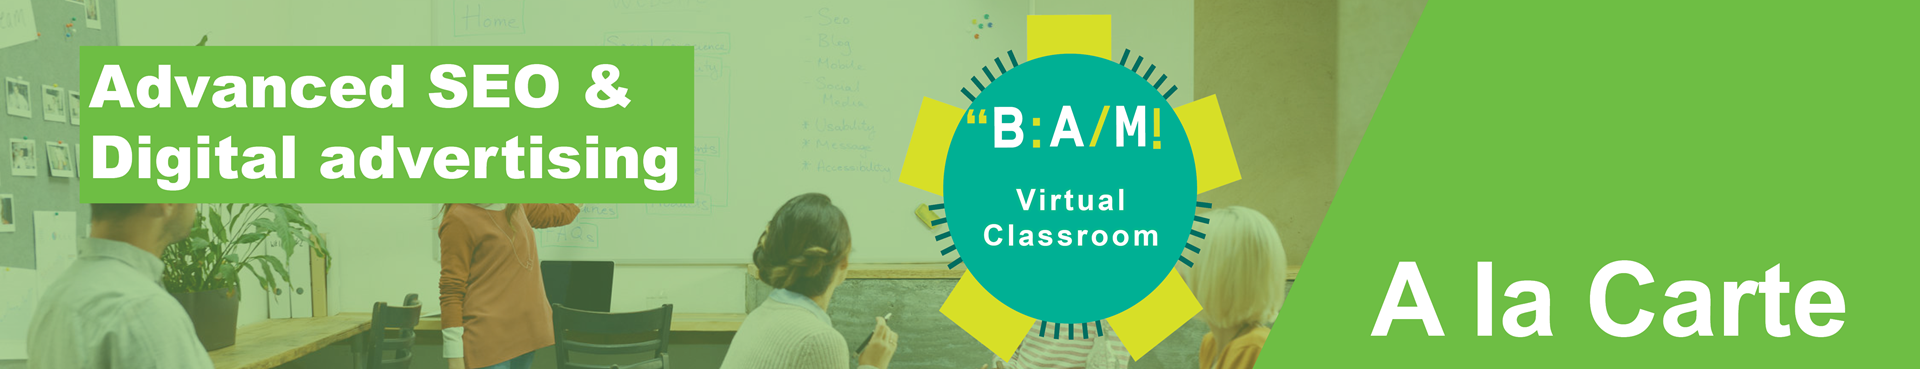 advanced seo digital advertising_virtual classroom